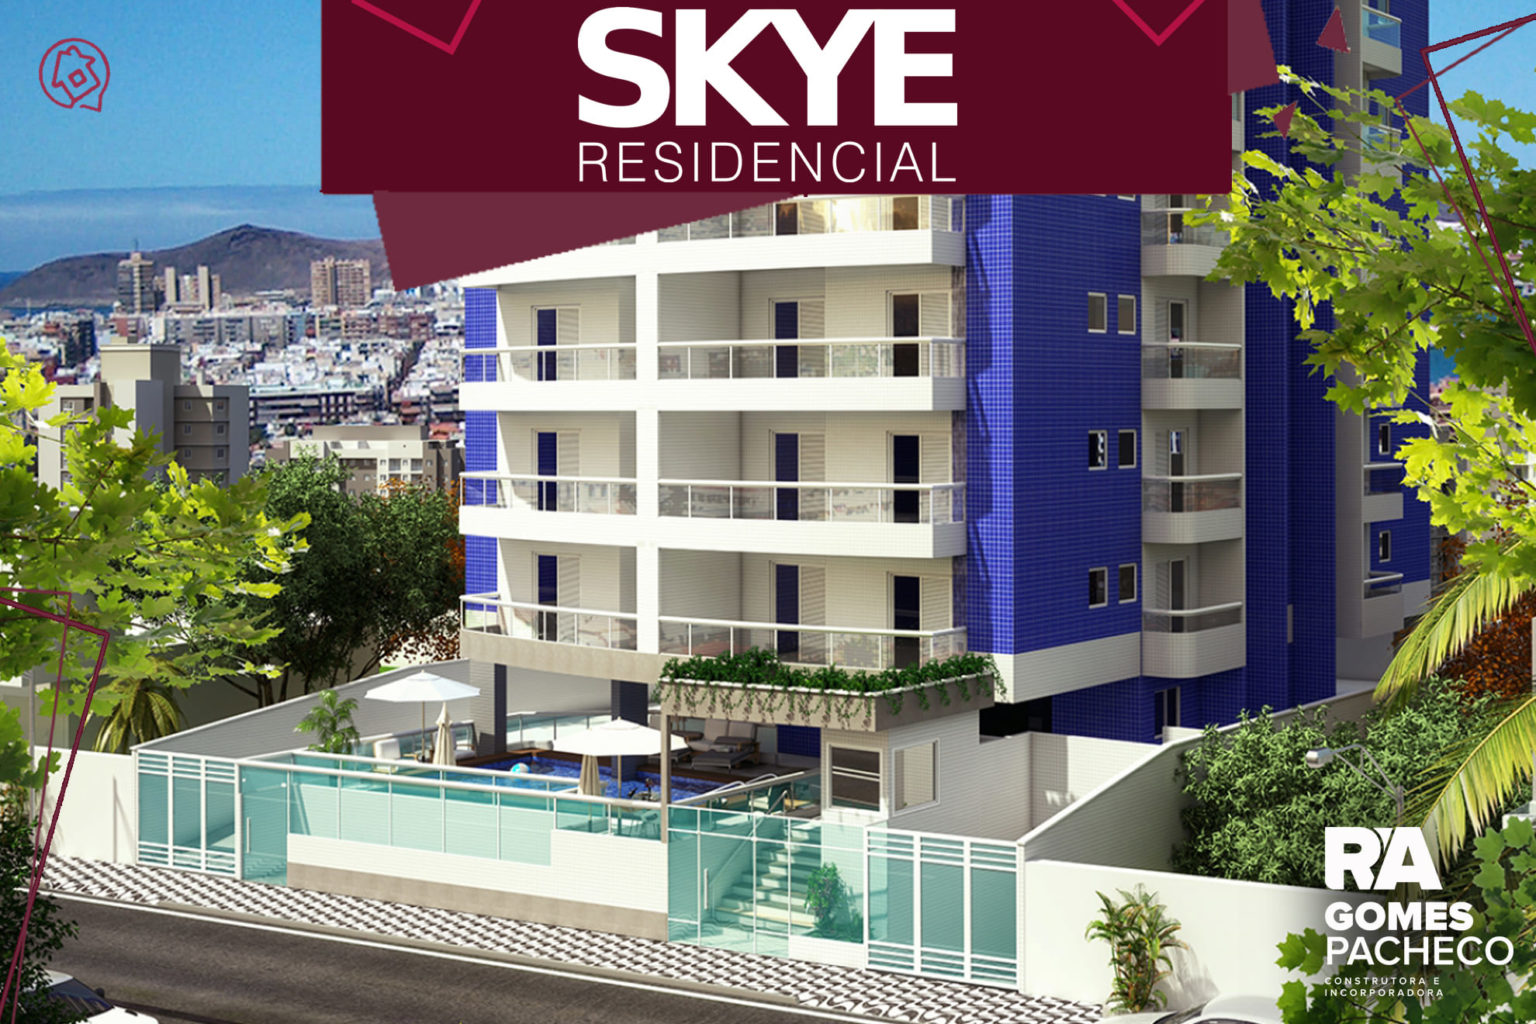 imagem-ragomespacheco-BG-residencial-skye